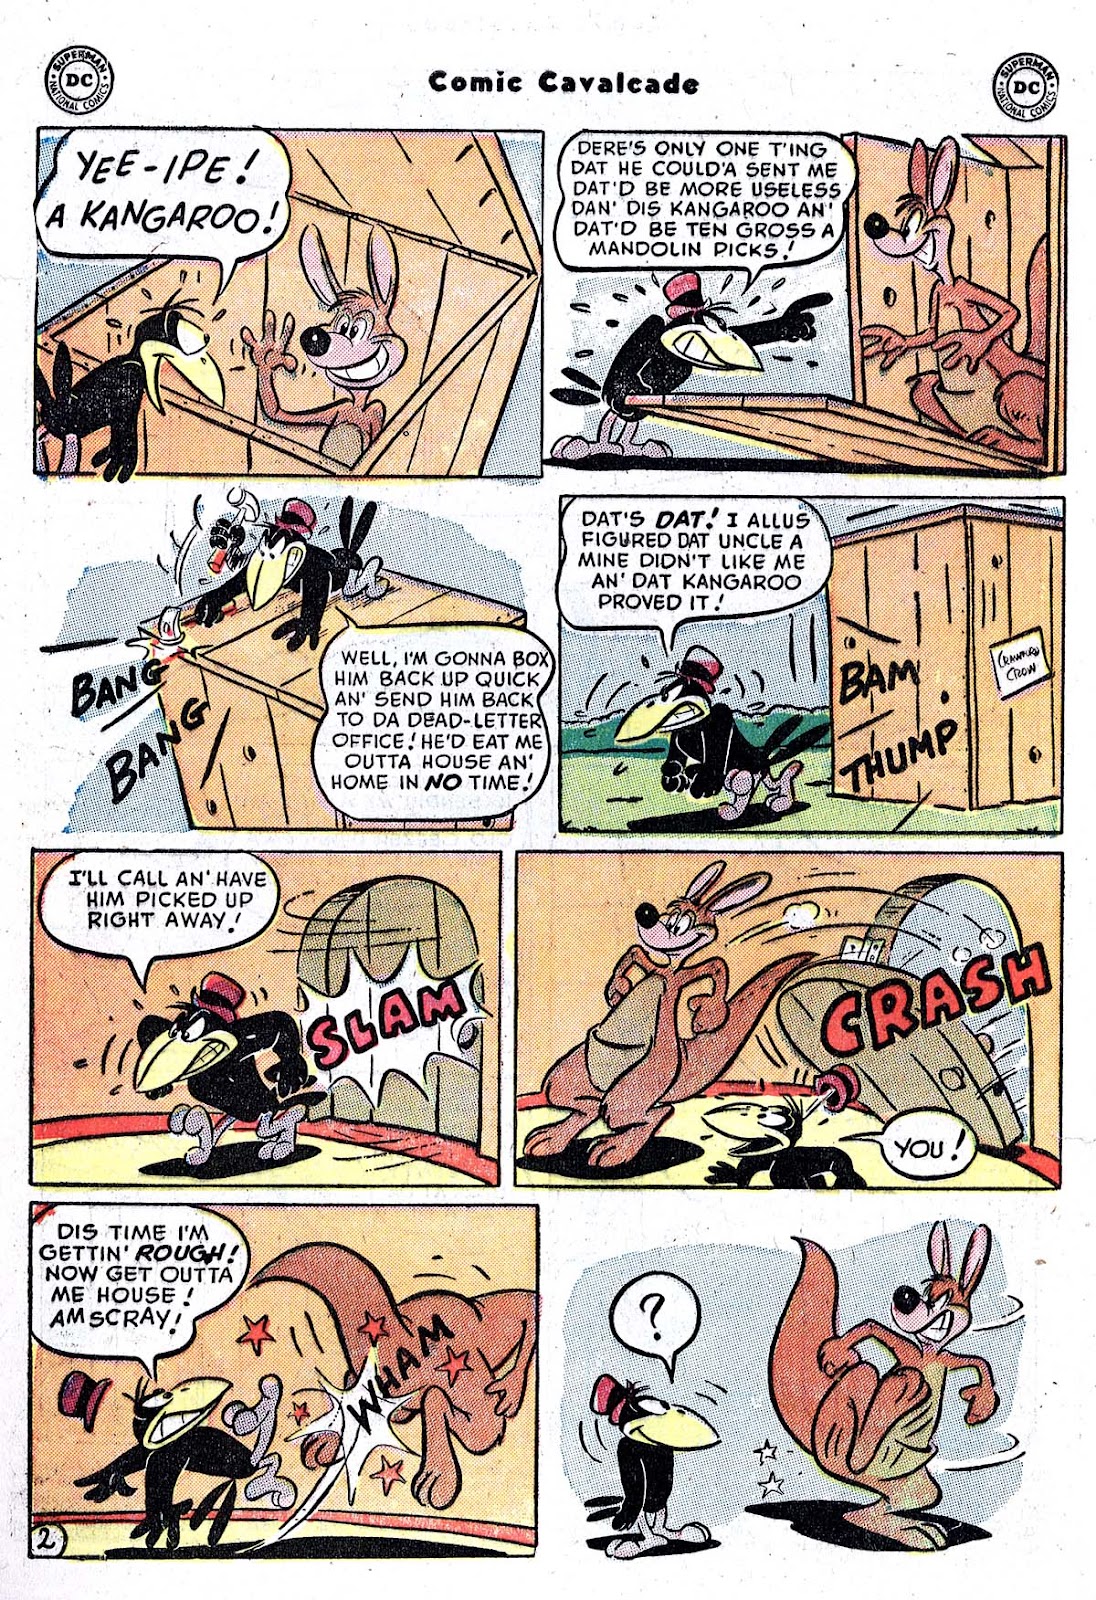 Comic Cavalcade issue 58 - Page 4